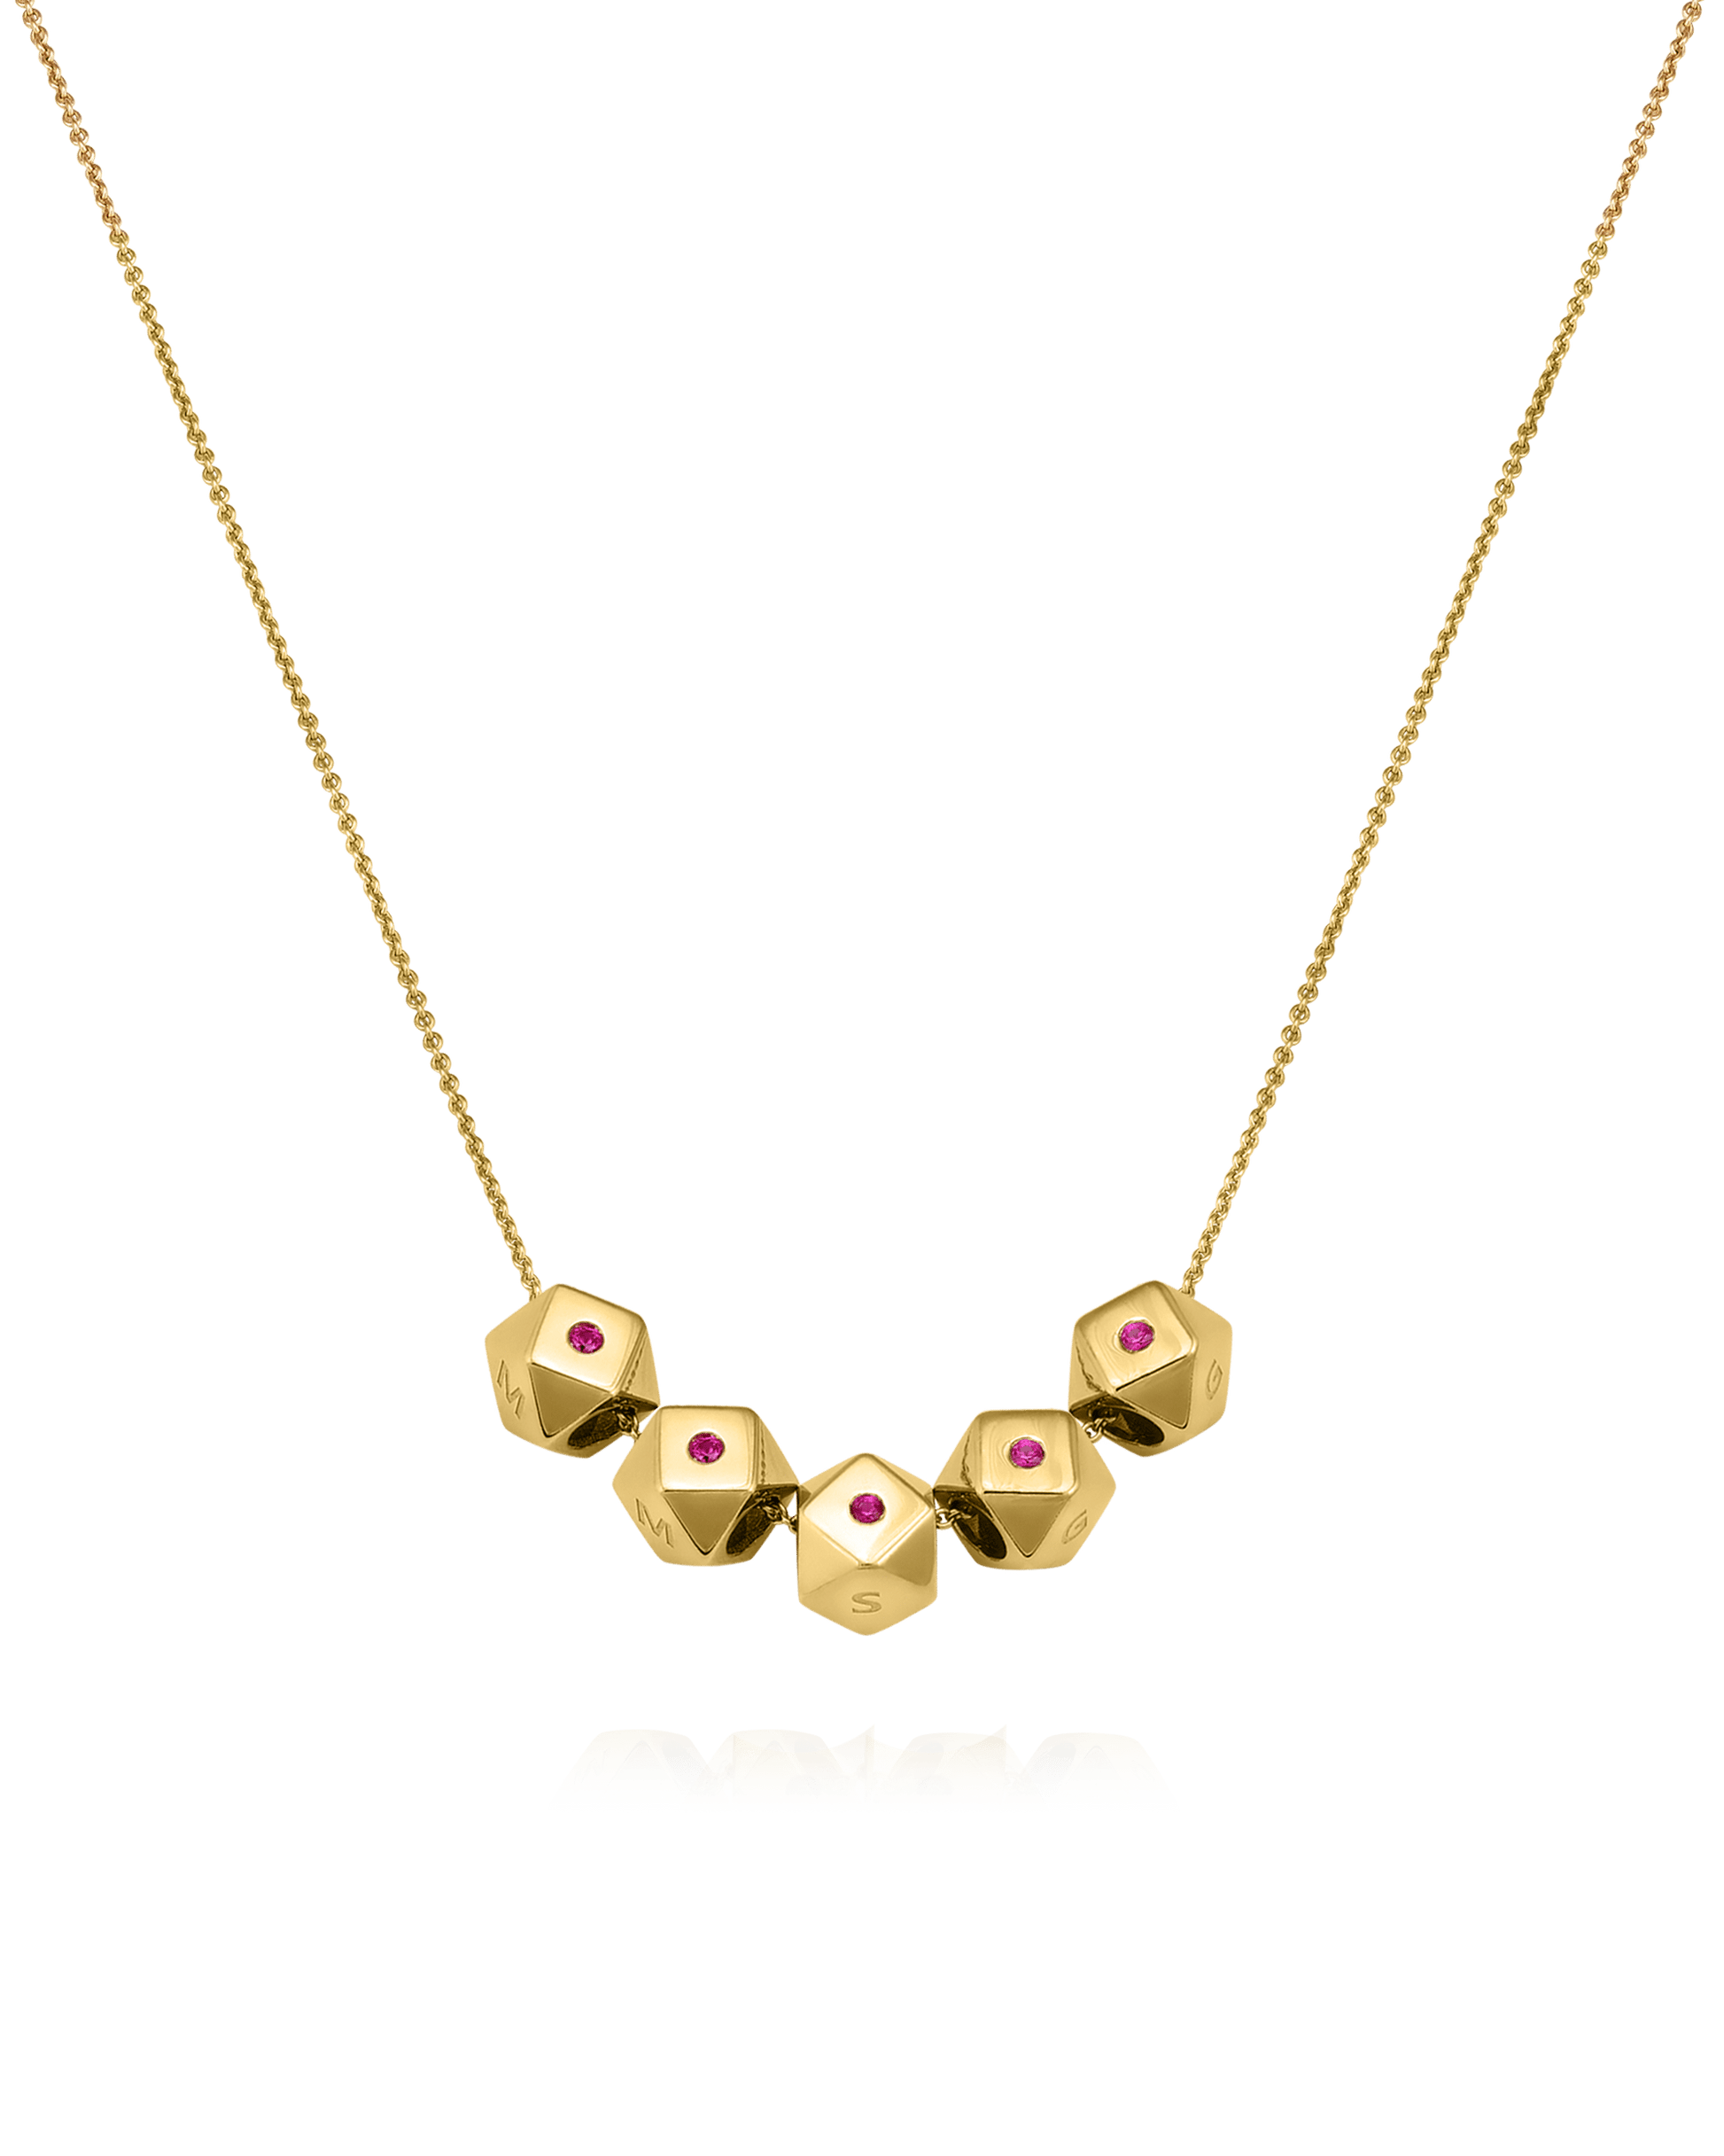 Hedra Necklace - 18K Gold Vermeil Necklaces magal-dev 5 Charms 16”+2” extender 